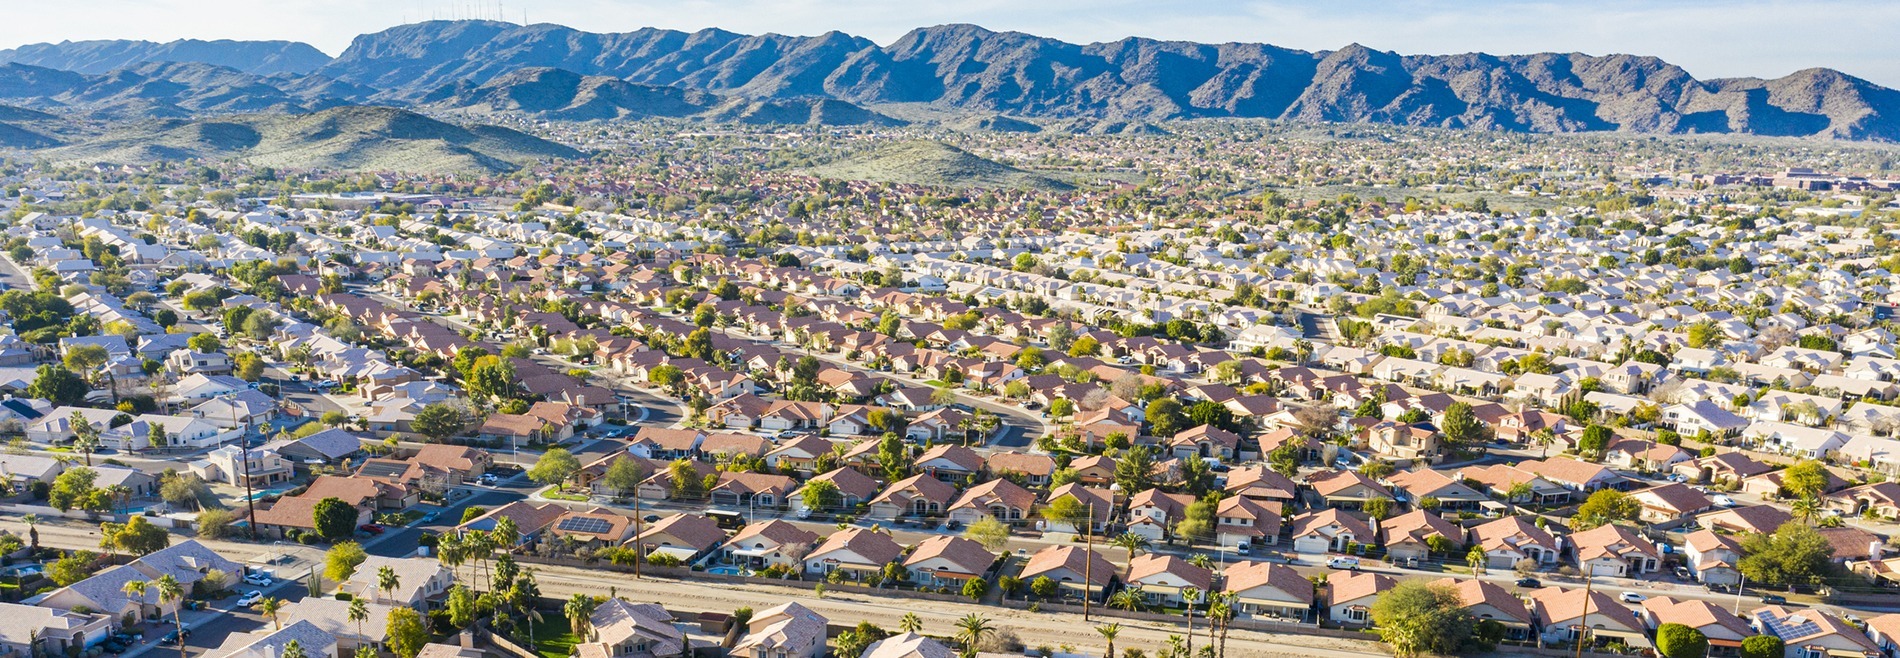 Arizona Property Division